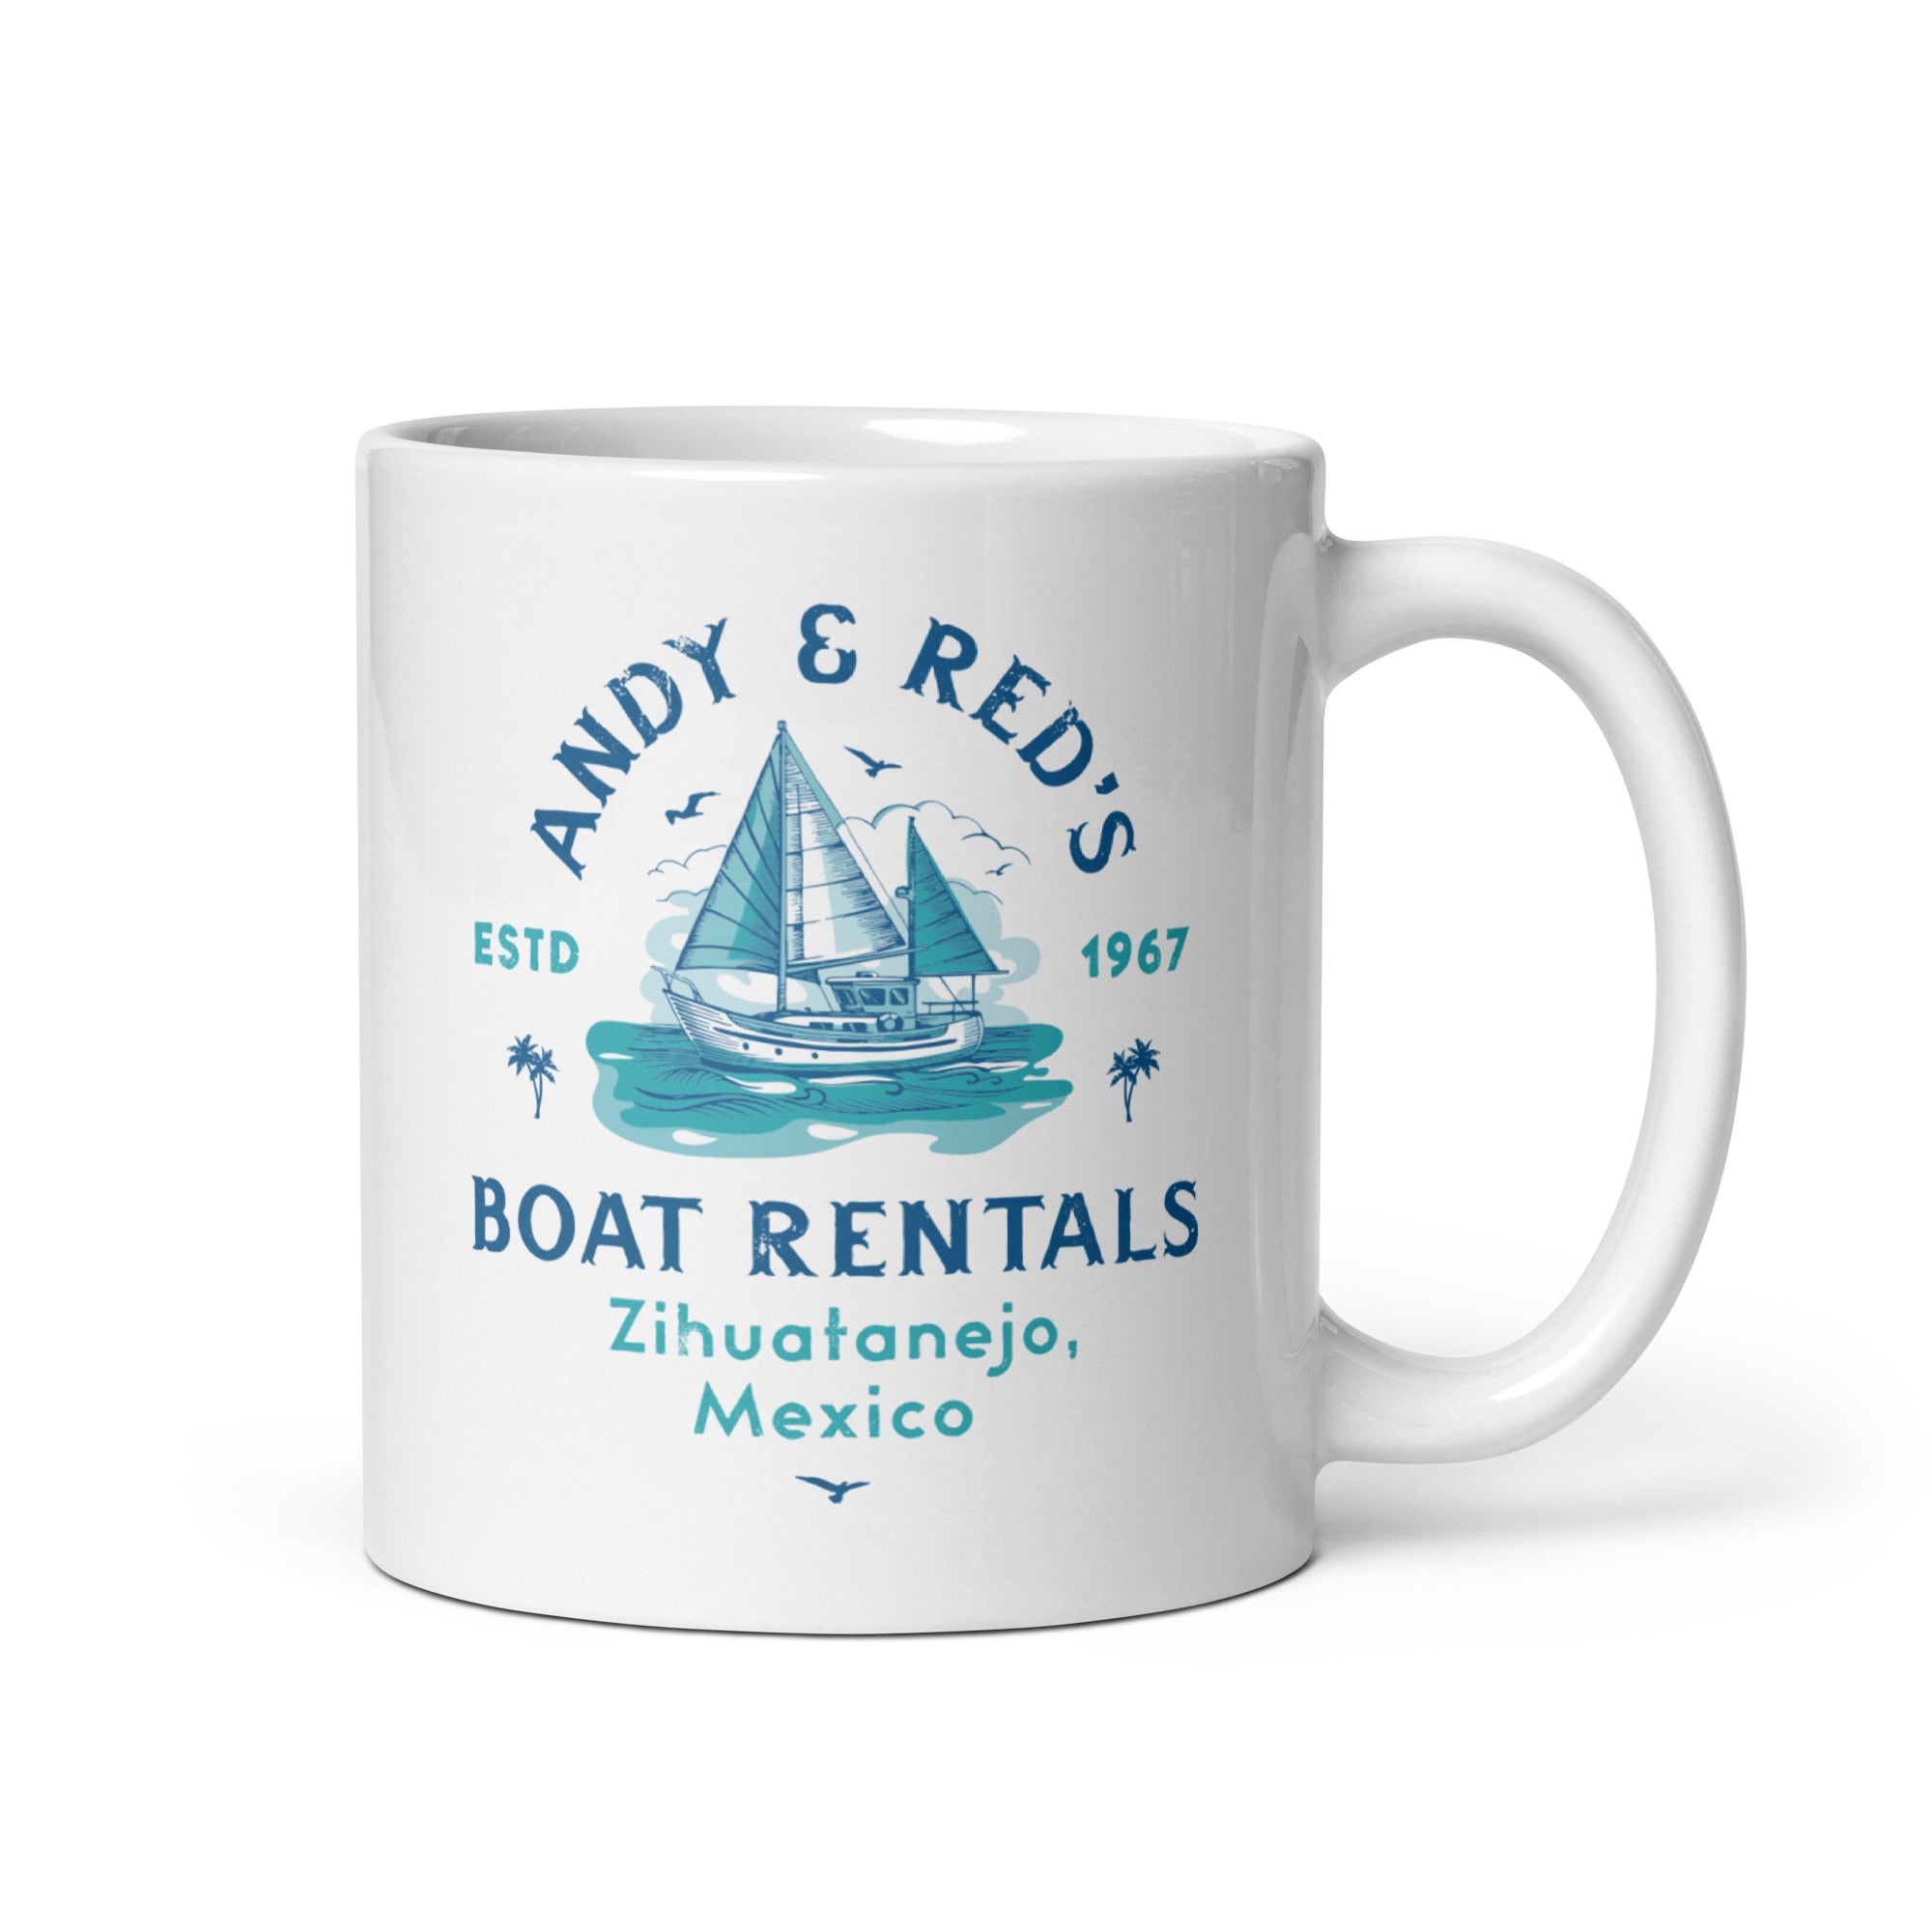 Andy & Red's Boat Rentals - 11oz Coffee Mug